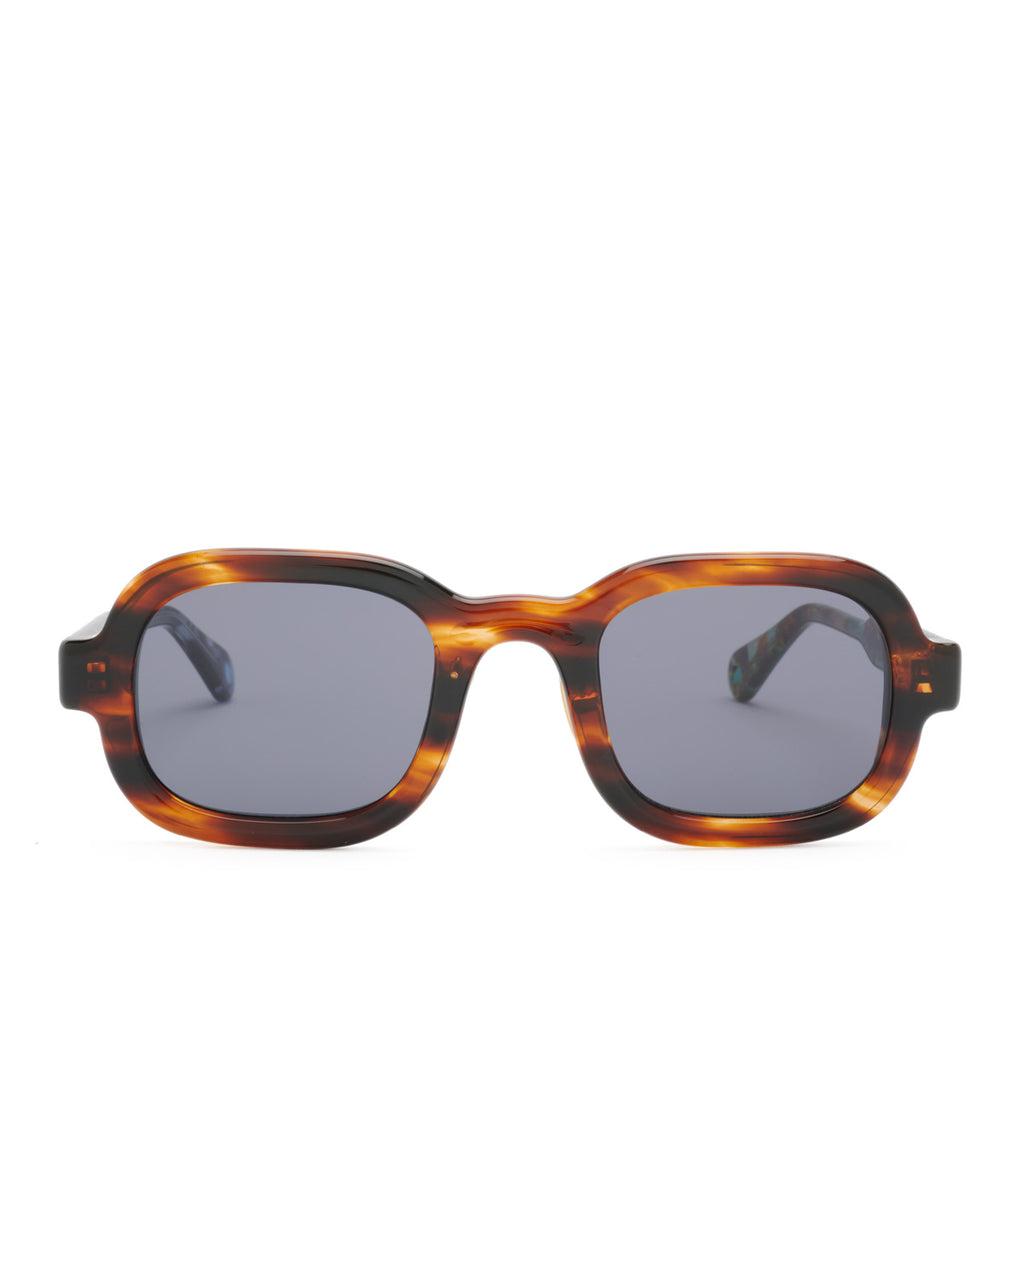 Newman Post Modern Primitive Eye Protection Sunglasses - Triple/Grey 1